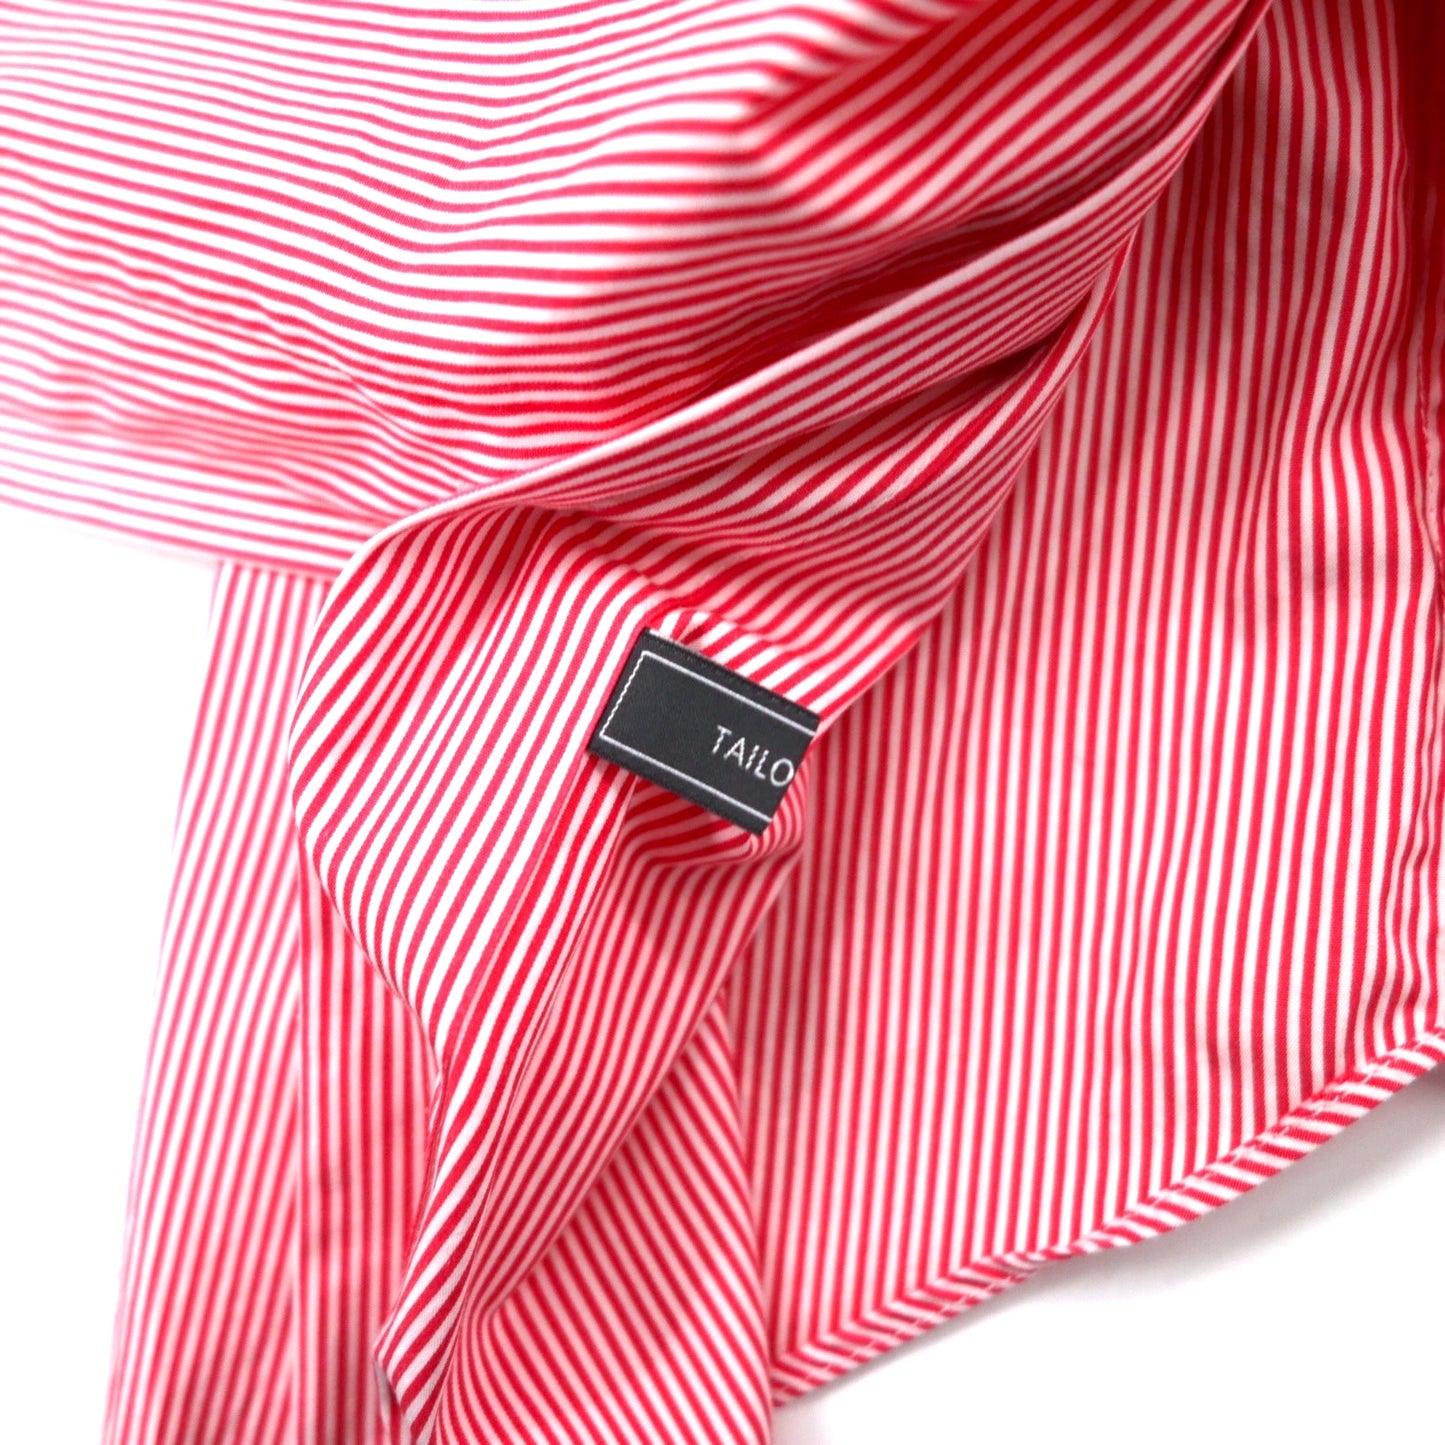 Salvatore Ferragamo Italy Made Button-Down Shirts XL Pink Striped ...